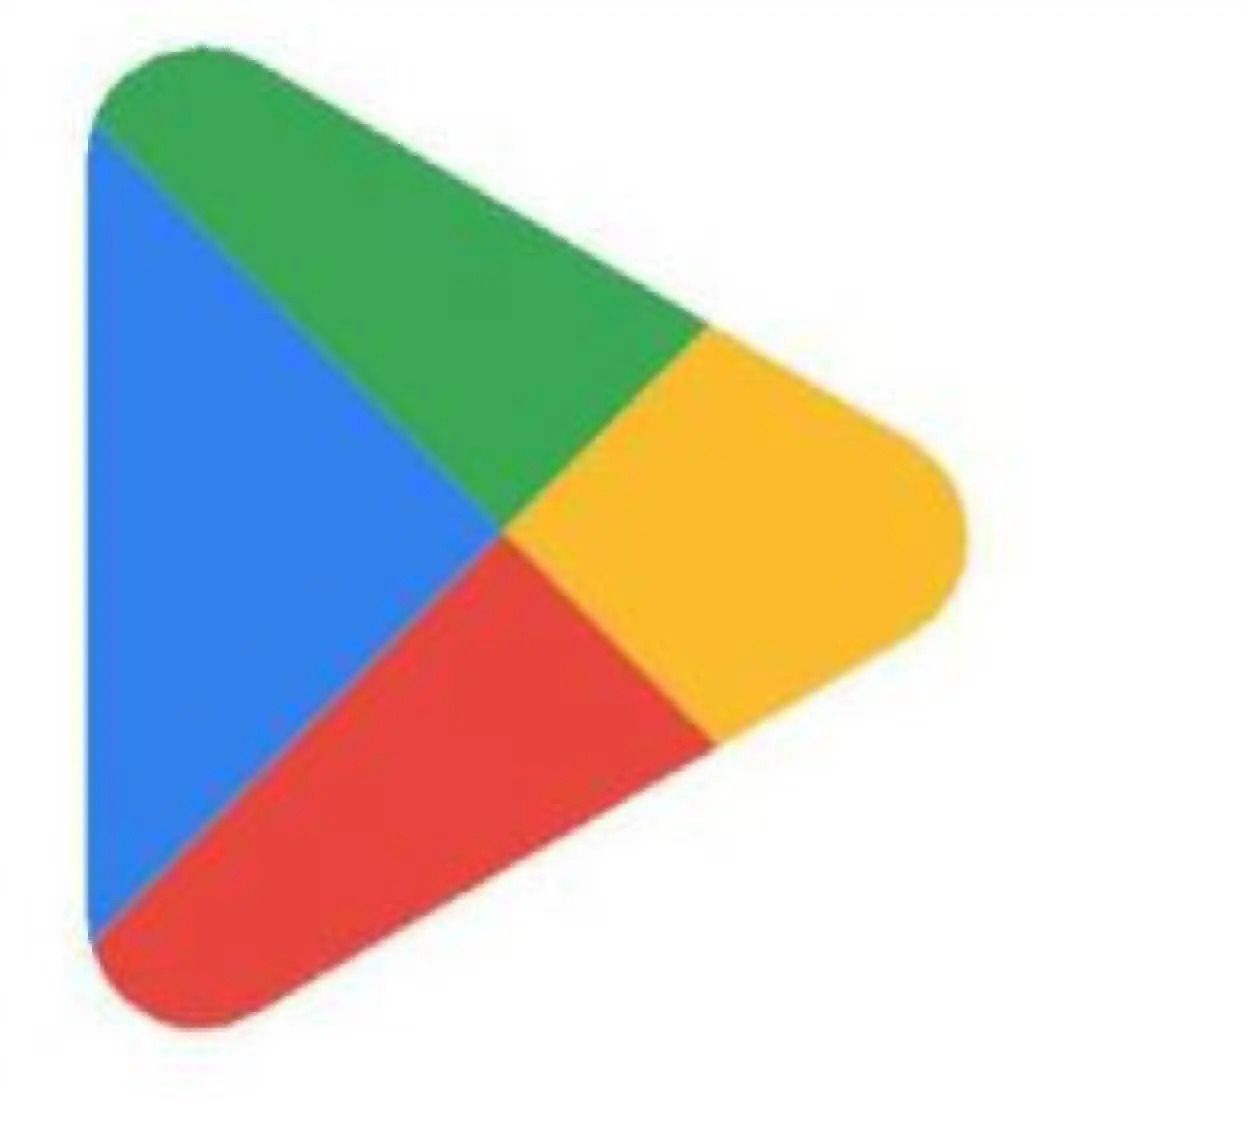 A representation of the new Google Play logo